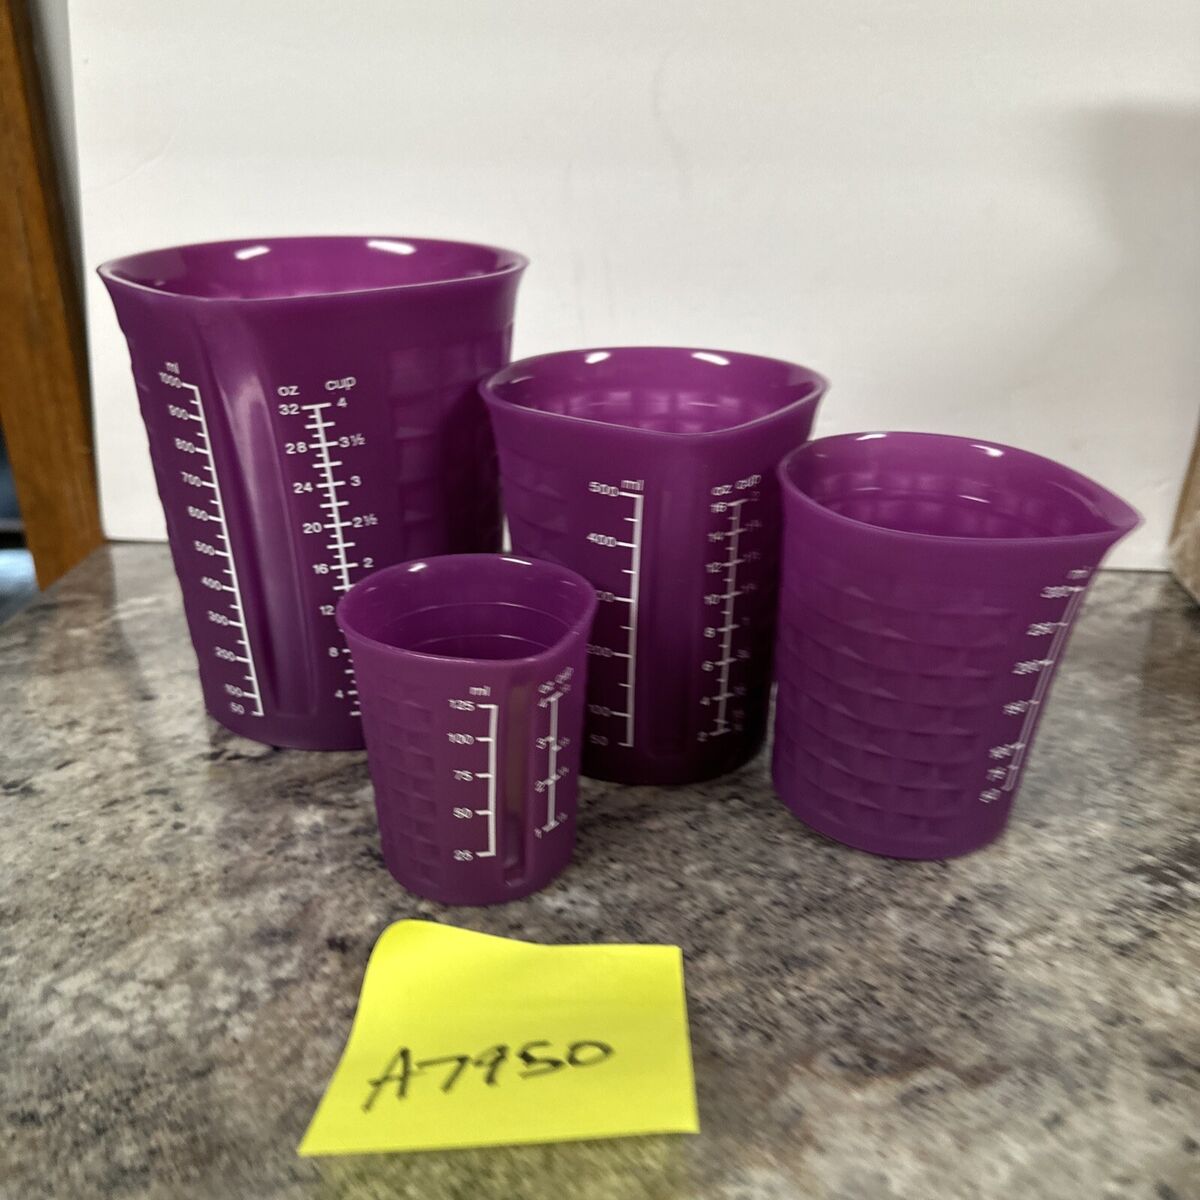 KOCHBLUME 4-Pc Nestable Silicone Measuring Cups Pour Spouts Purple New